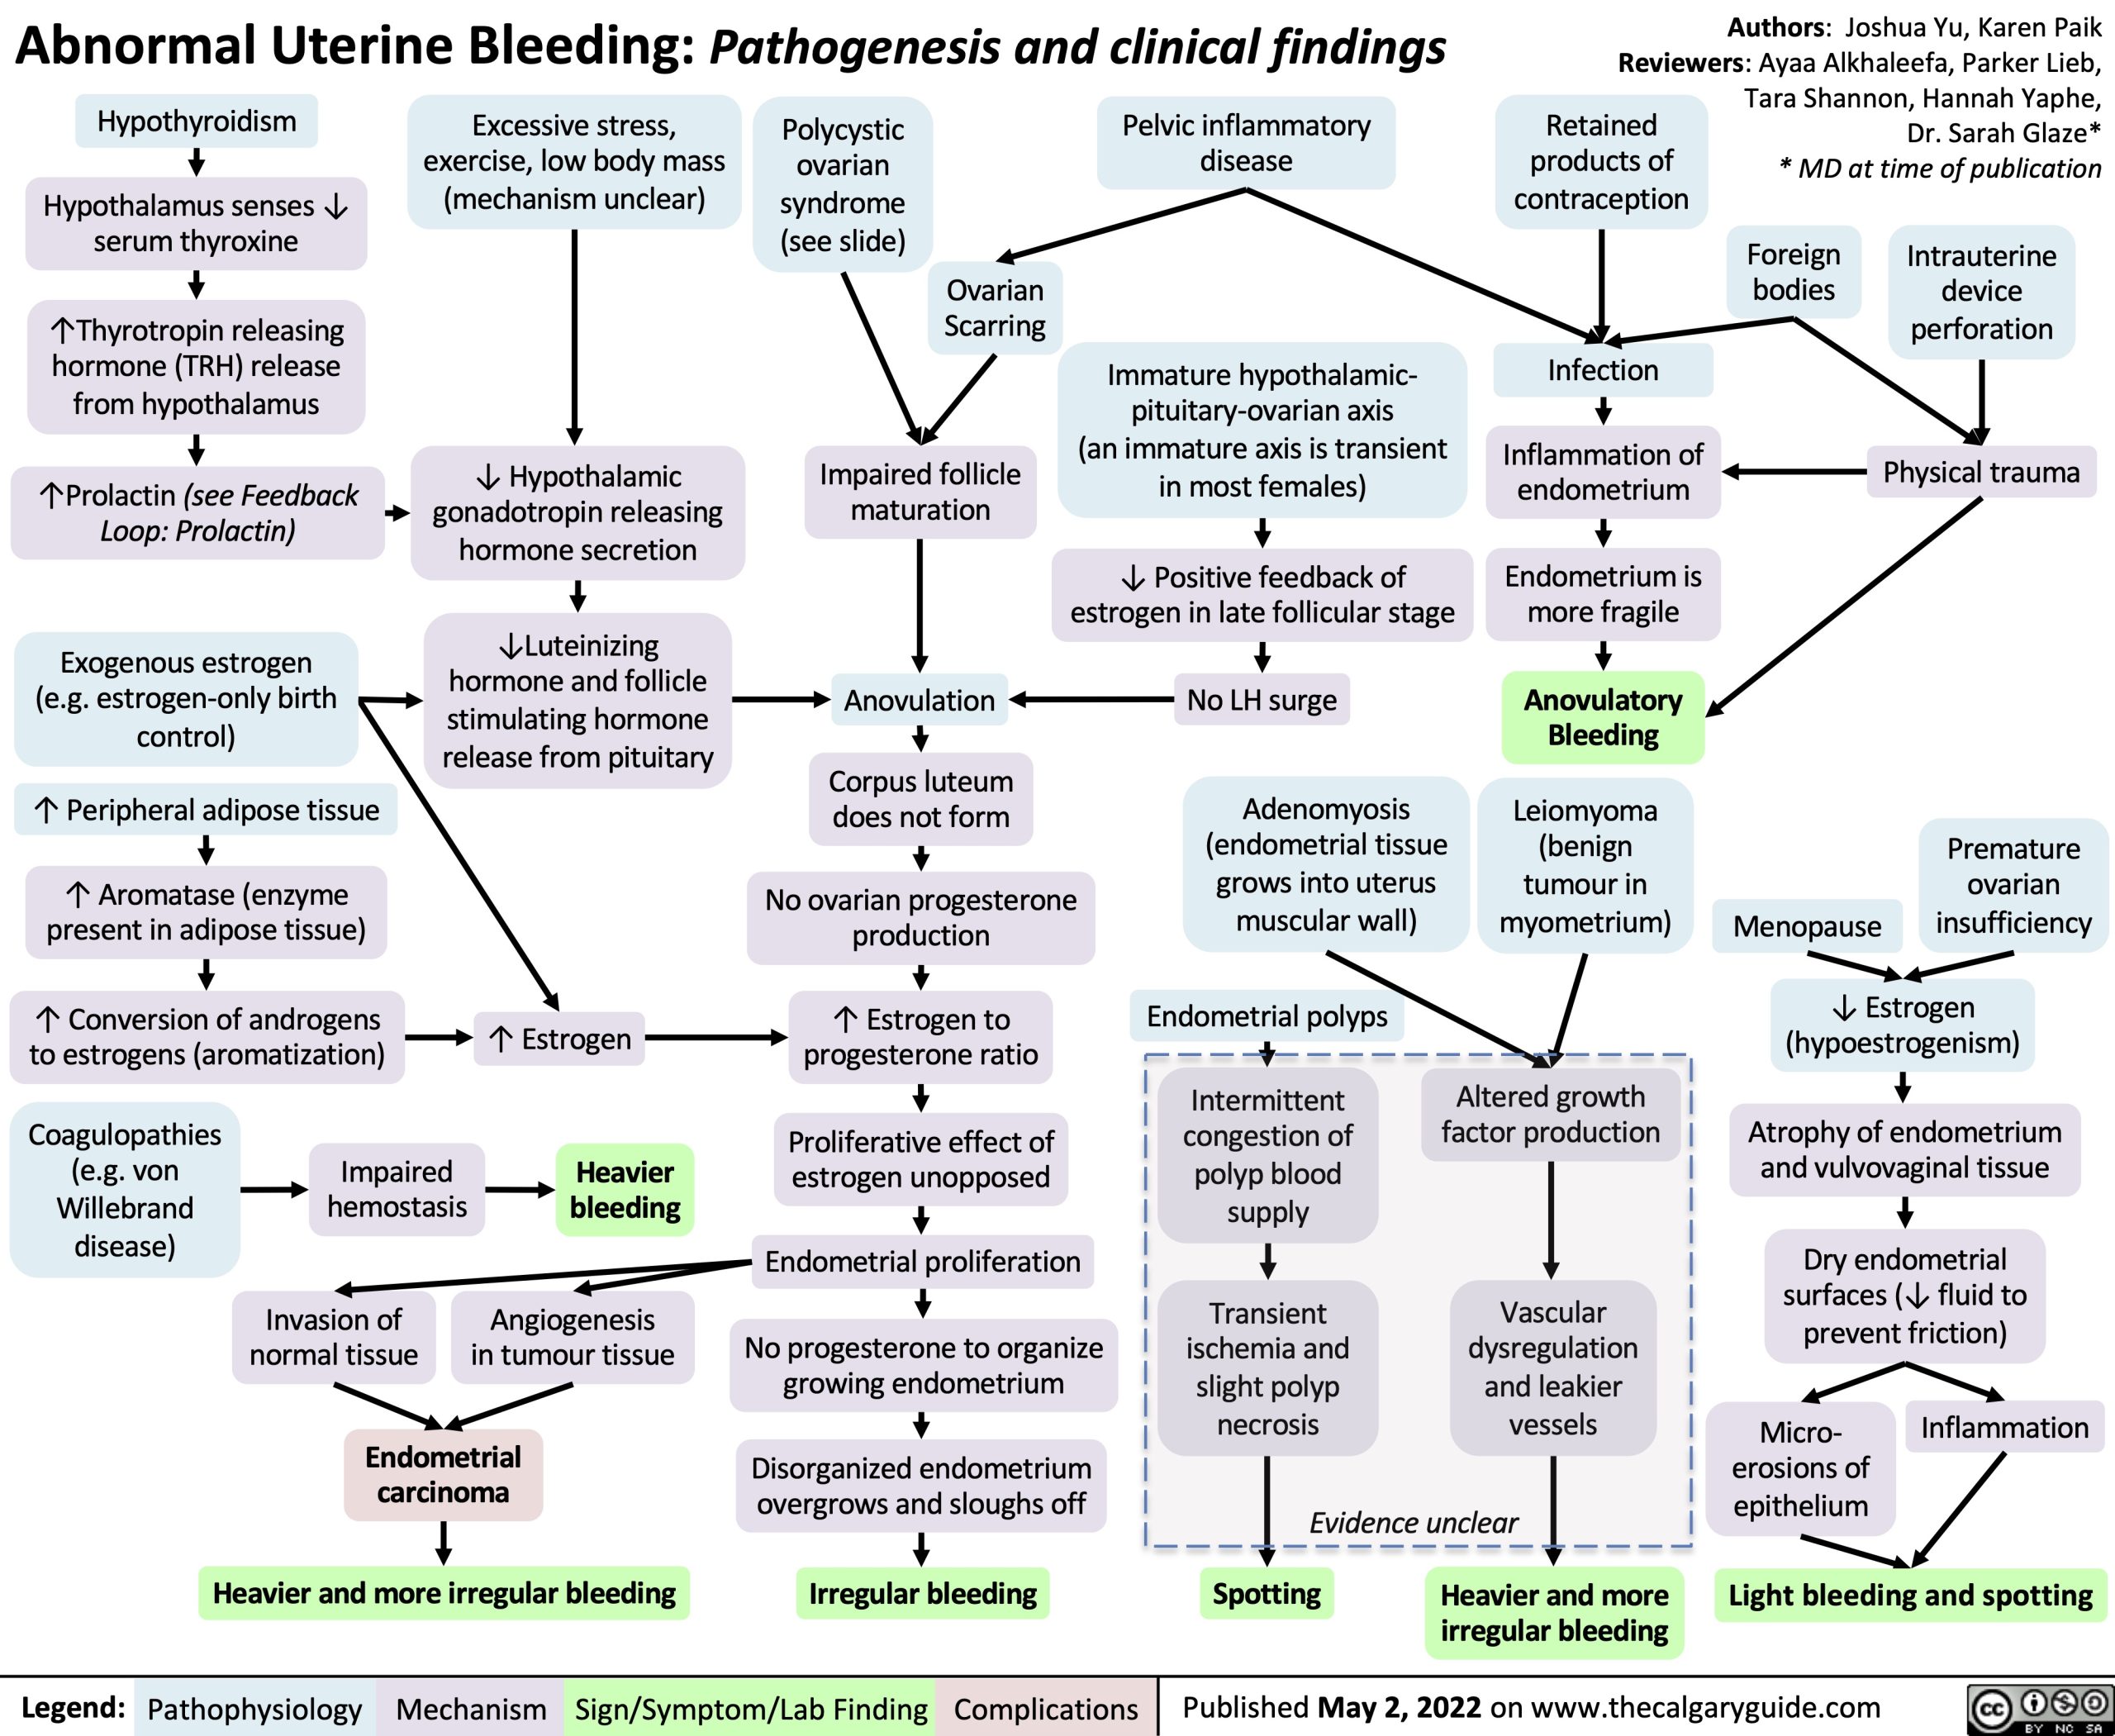 Abnormal Uterine Bleeding (AUB): Pathogenesis and clinical findings